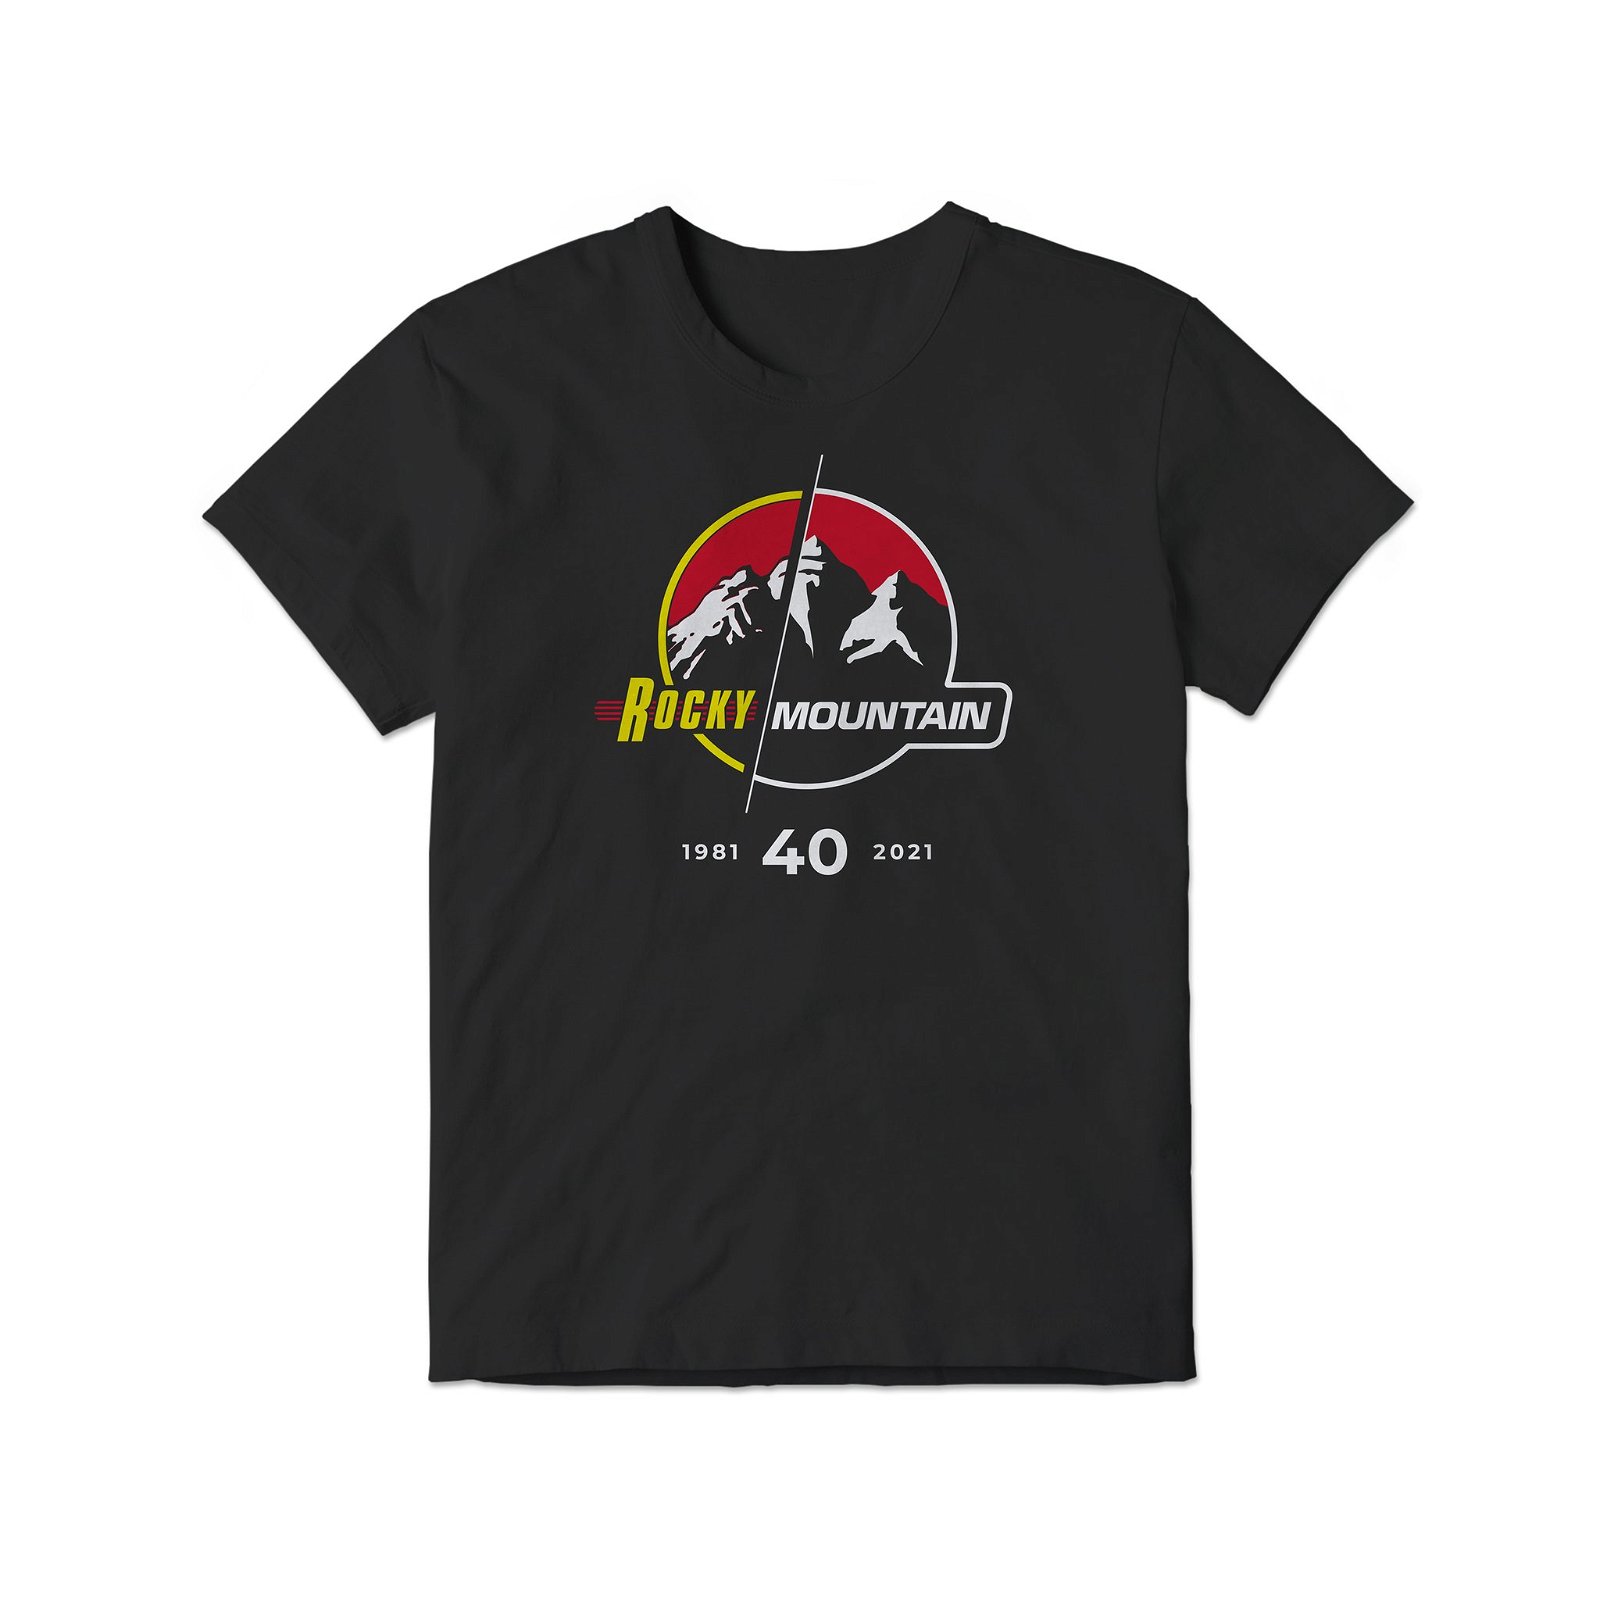 Rocky Mountain 40 years T-Shirt